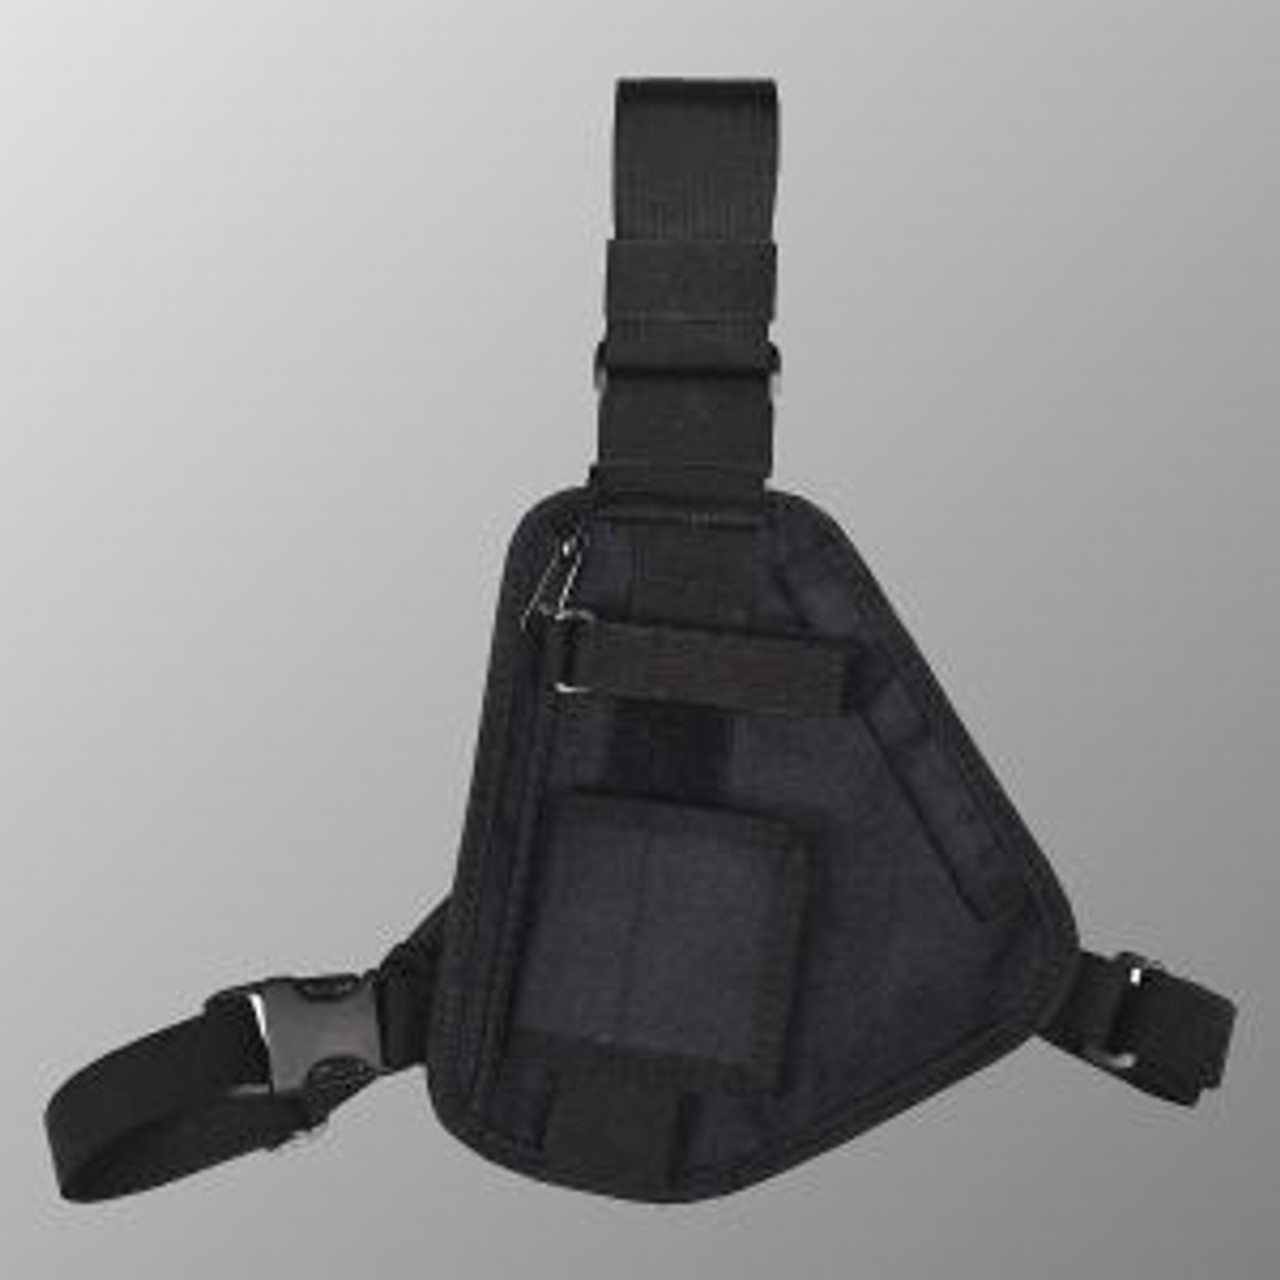 Motorola XTS4000 3-Point Chest Harness - Black